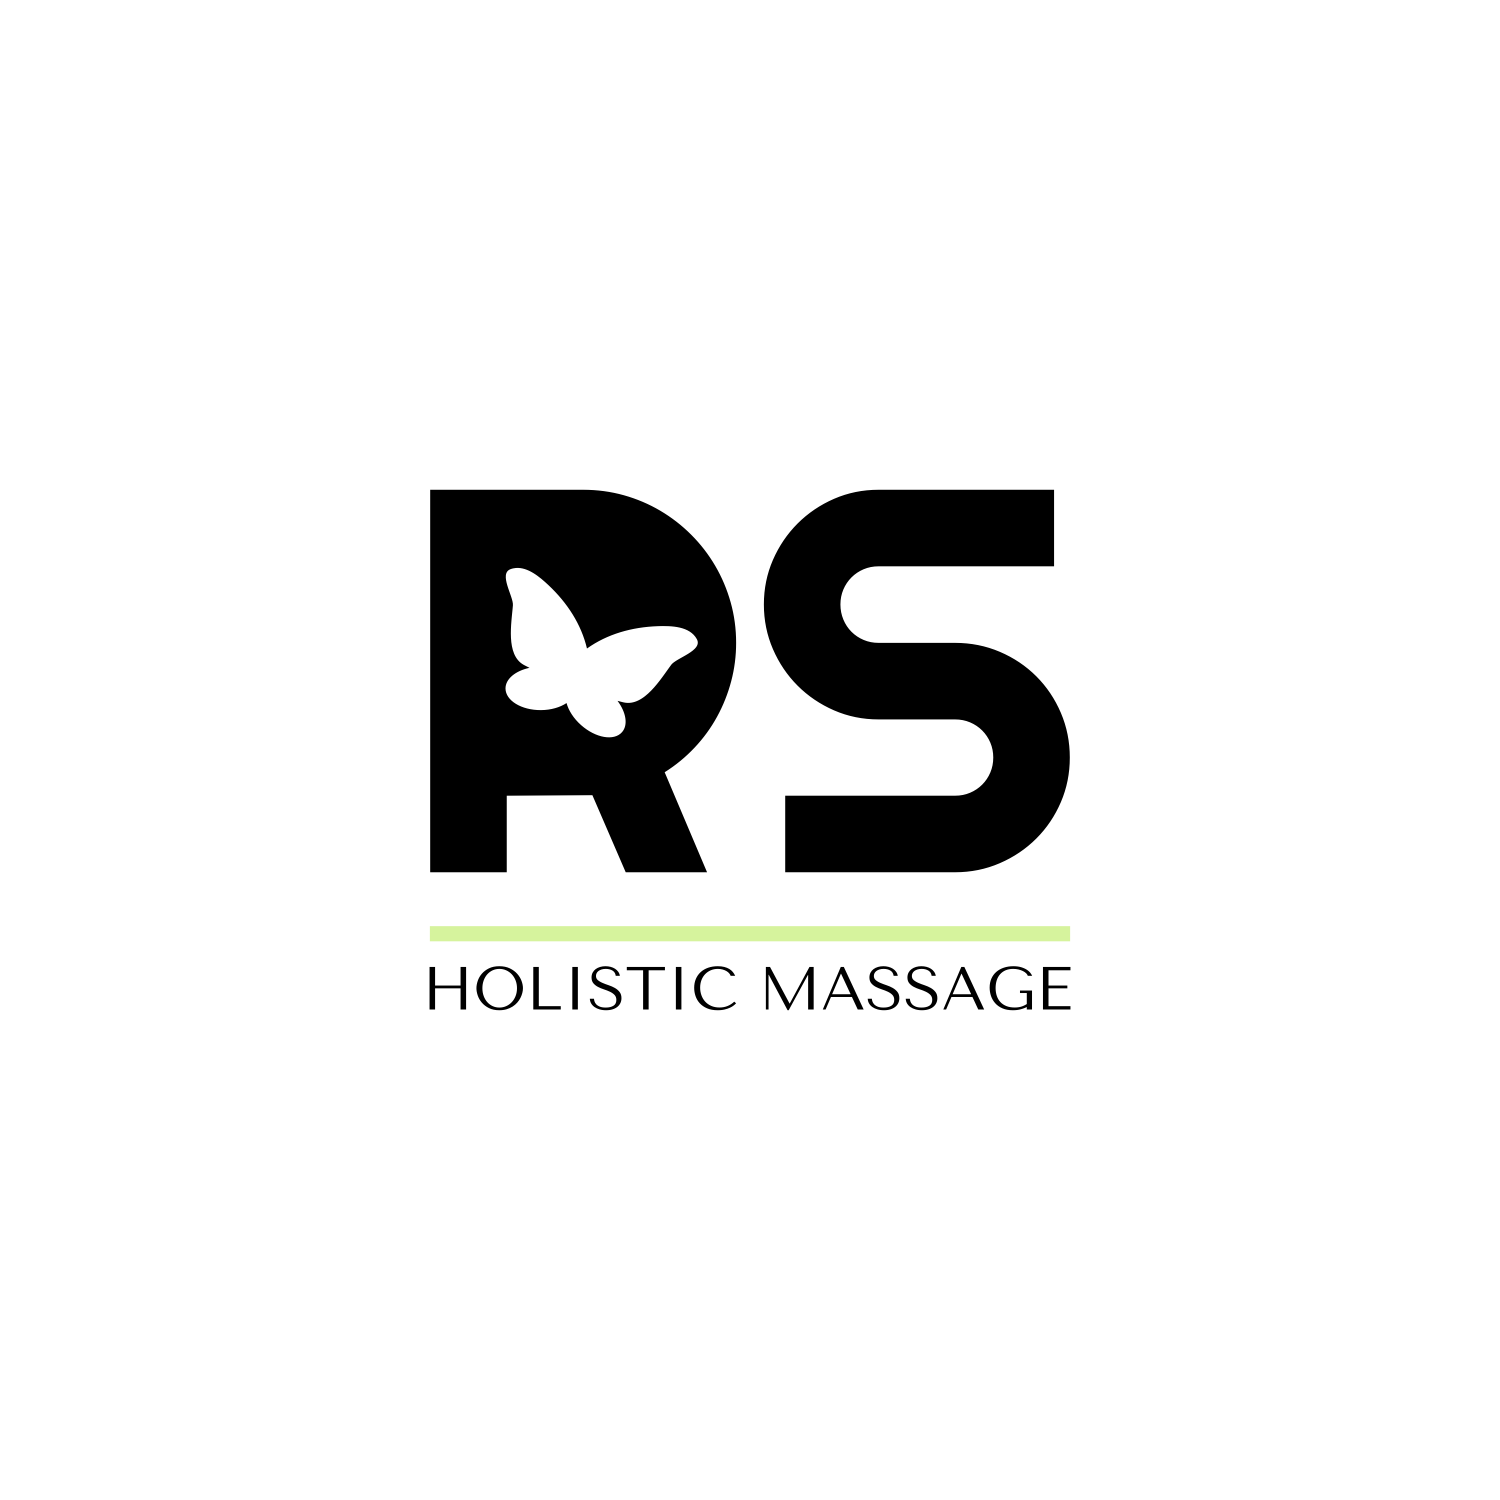 Massage saloon logo design